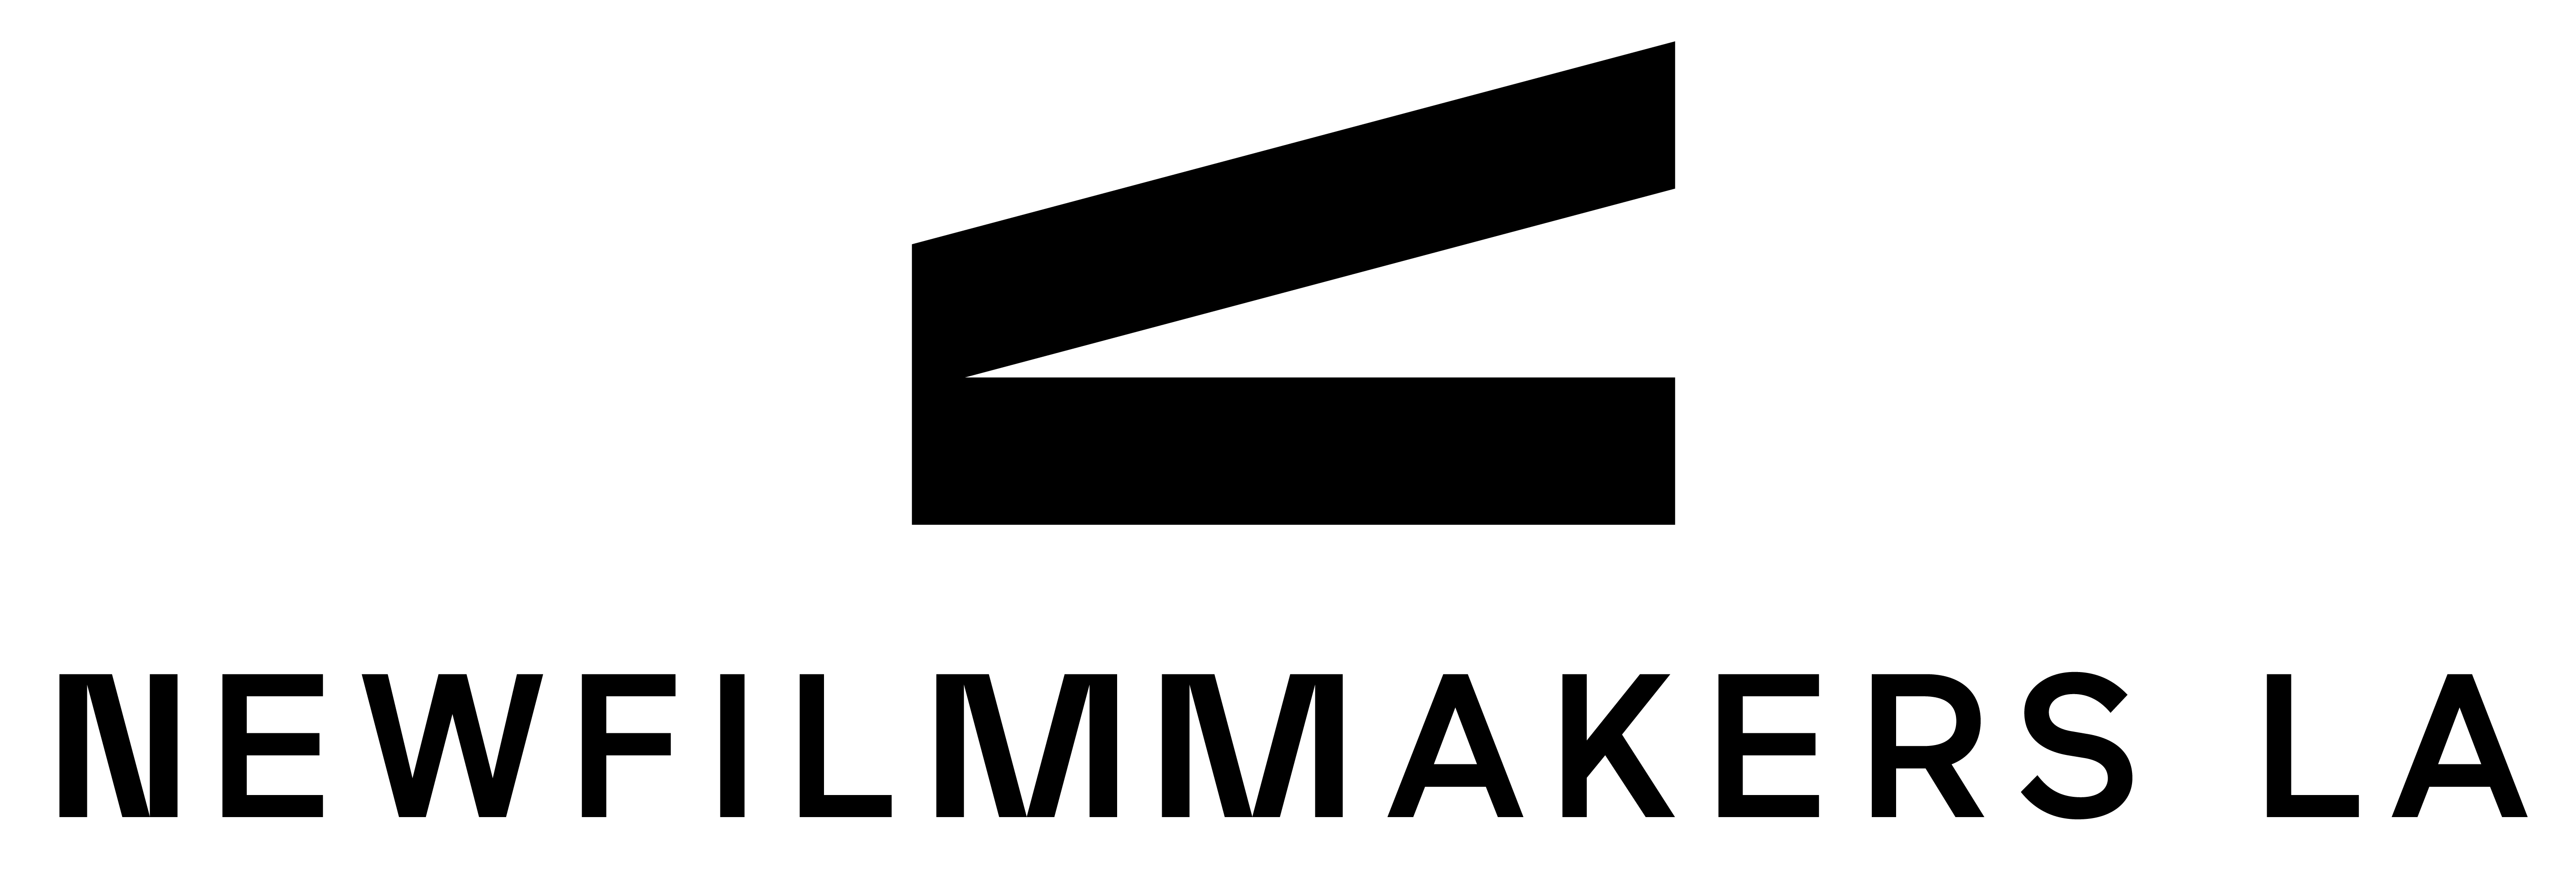 NewFilmmakers-LA-Logo-Black-JPG